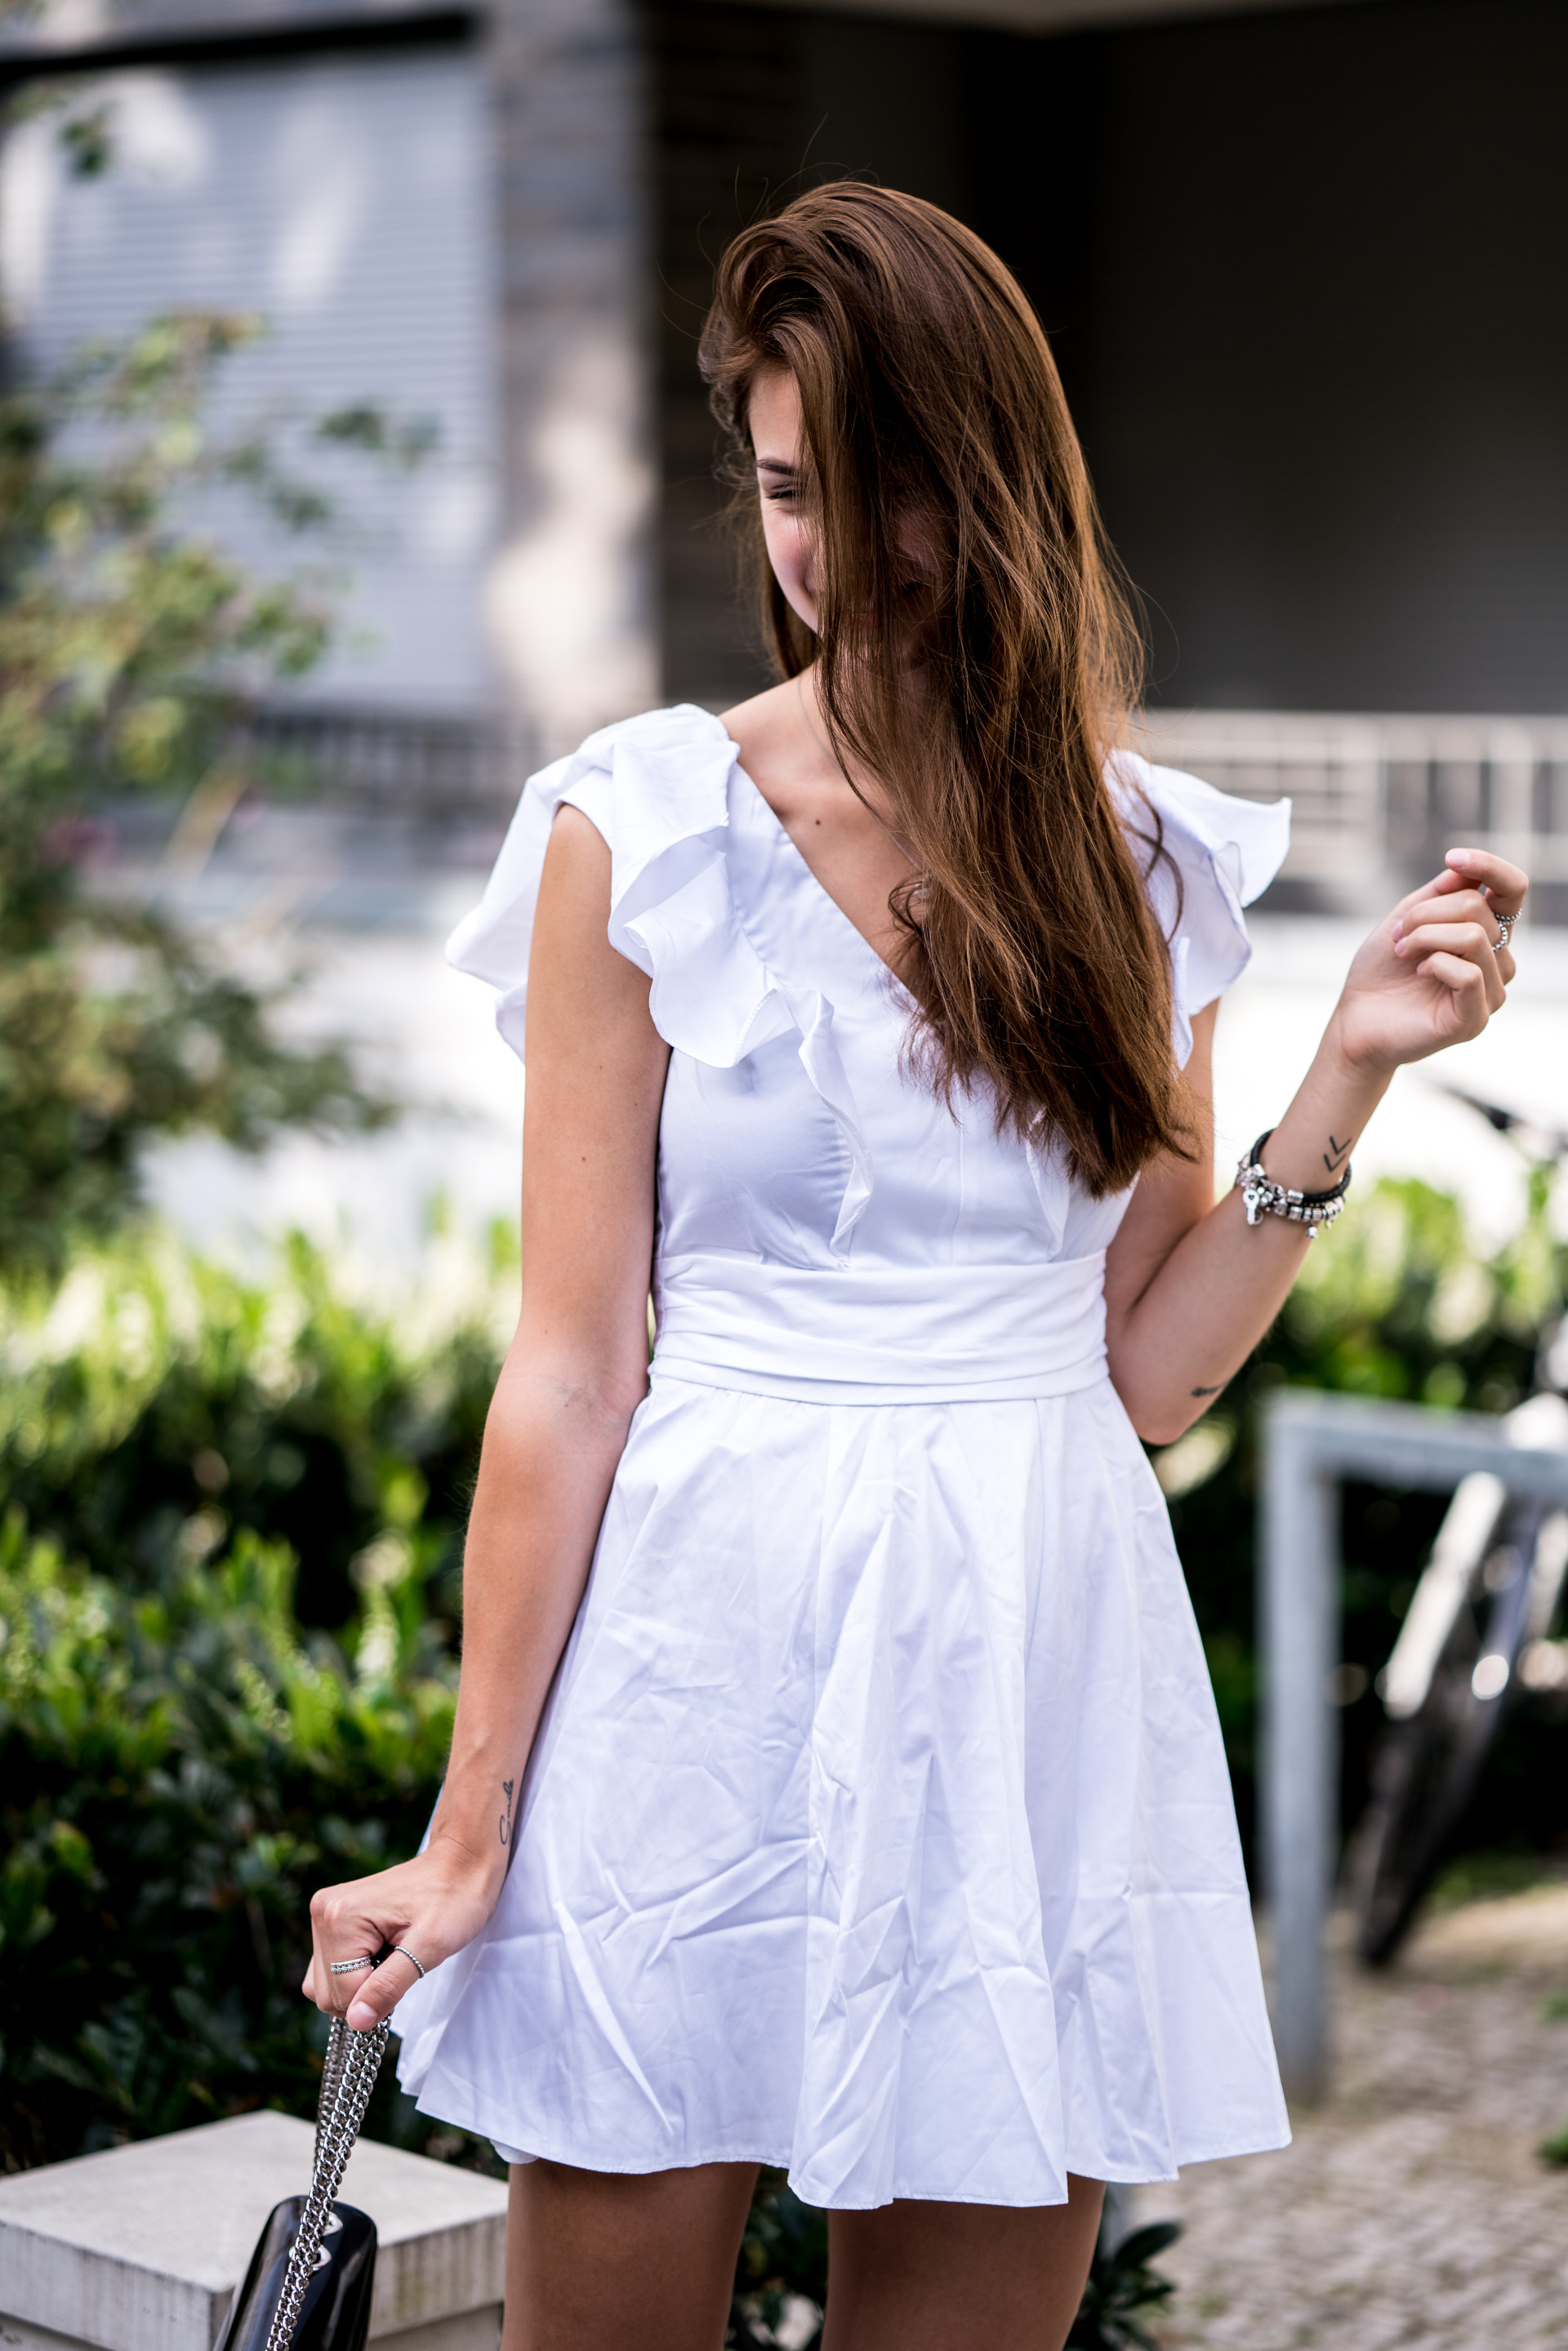 How to wear a white summer dress || Fashionblog Berlin